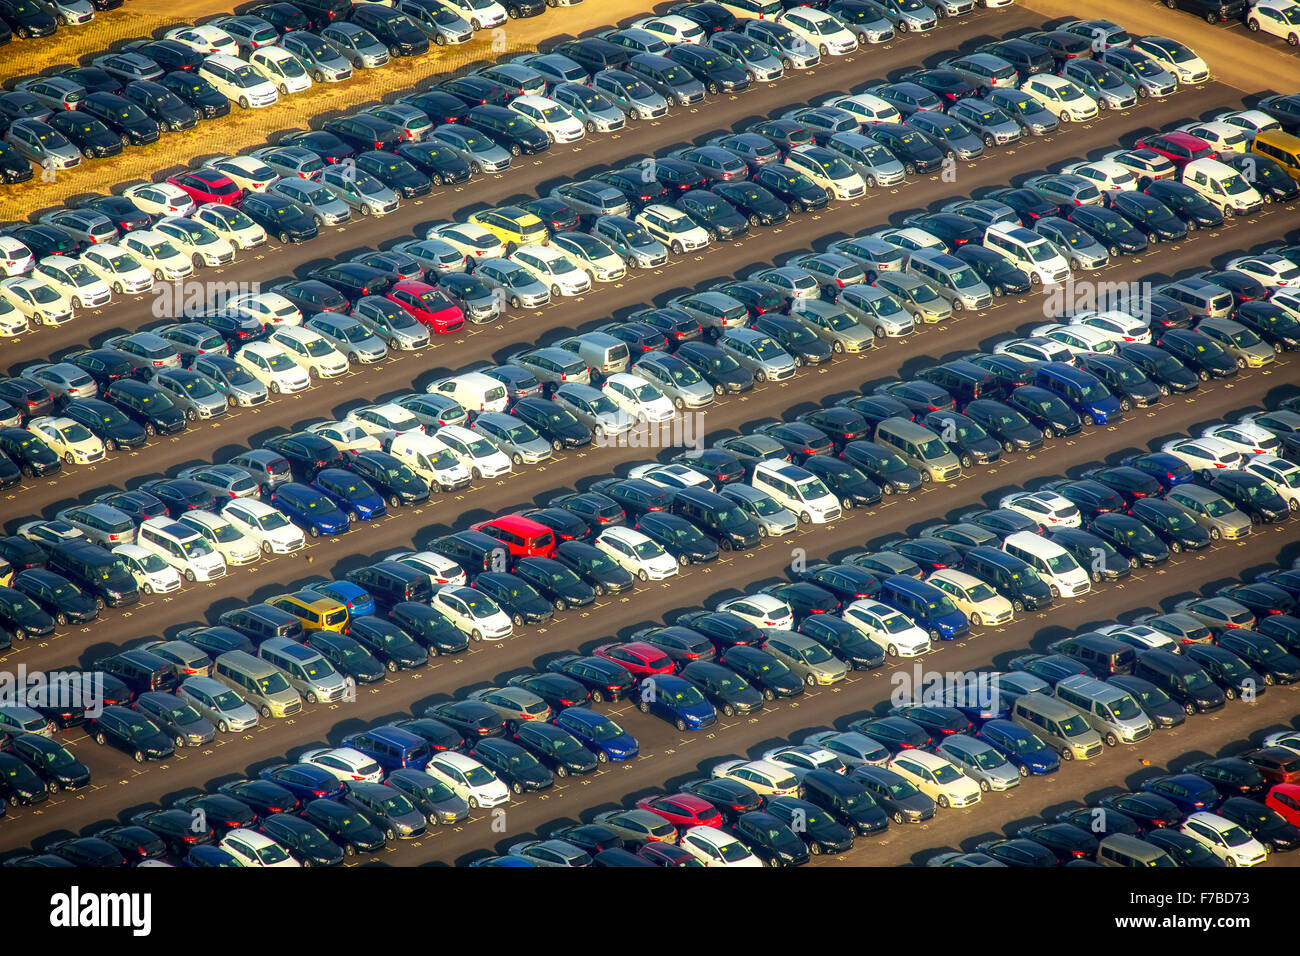 Auto-Importeur, Autohandel, großer Parkplatz, Autoverkauf, Neuwagen, Auto Lager, Autoimport EU Wagen Reimport Auto Händler Auto Stockfotografie - Alamy